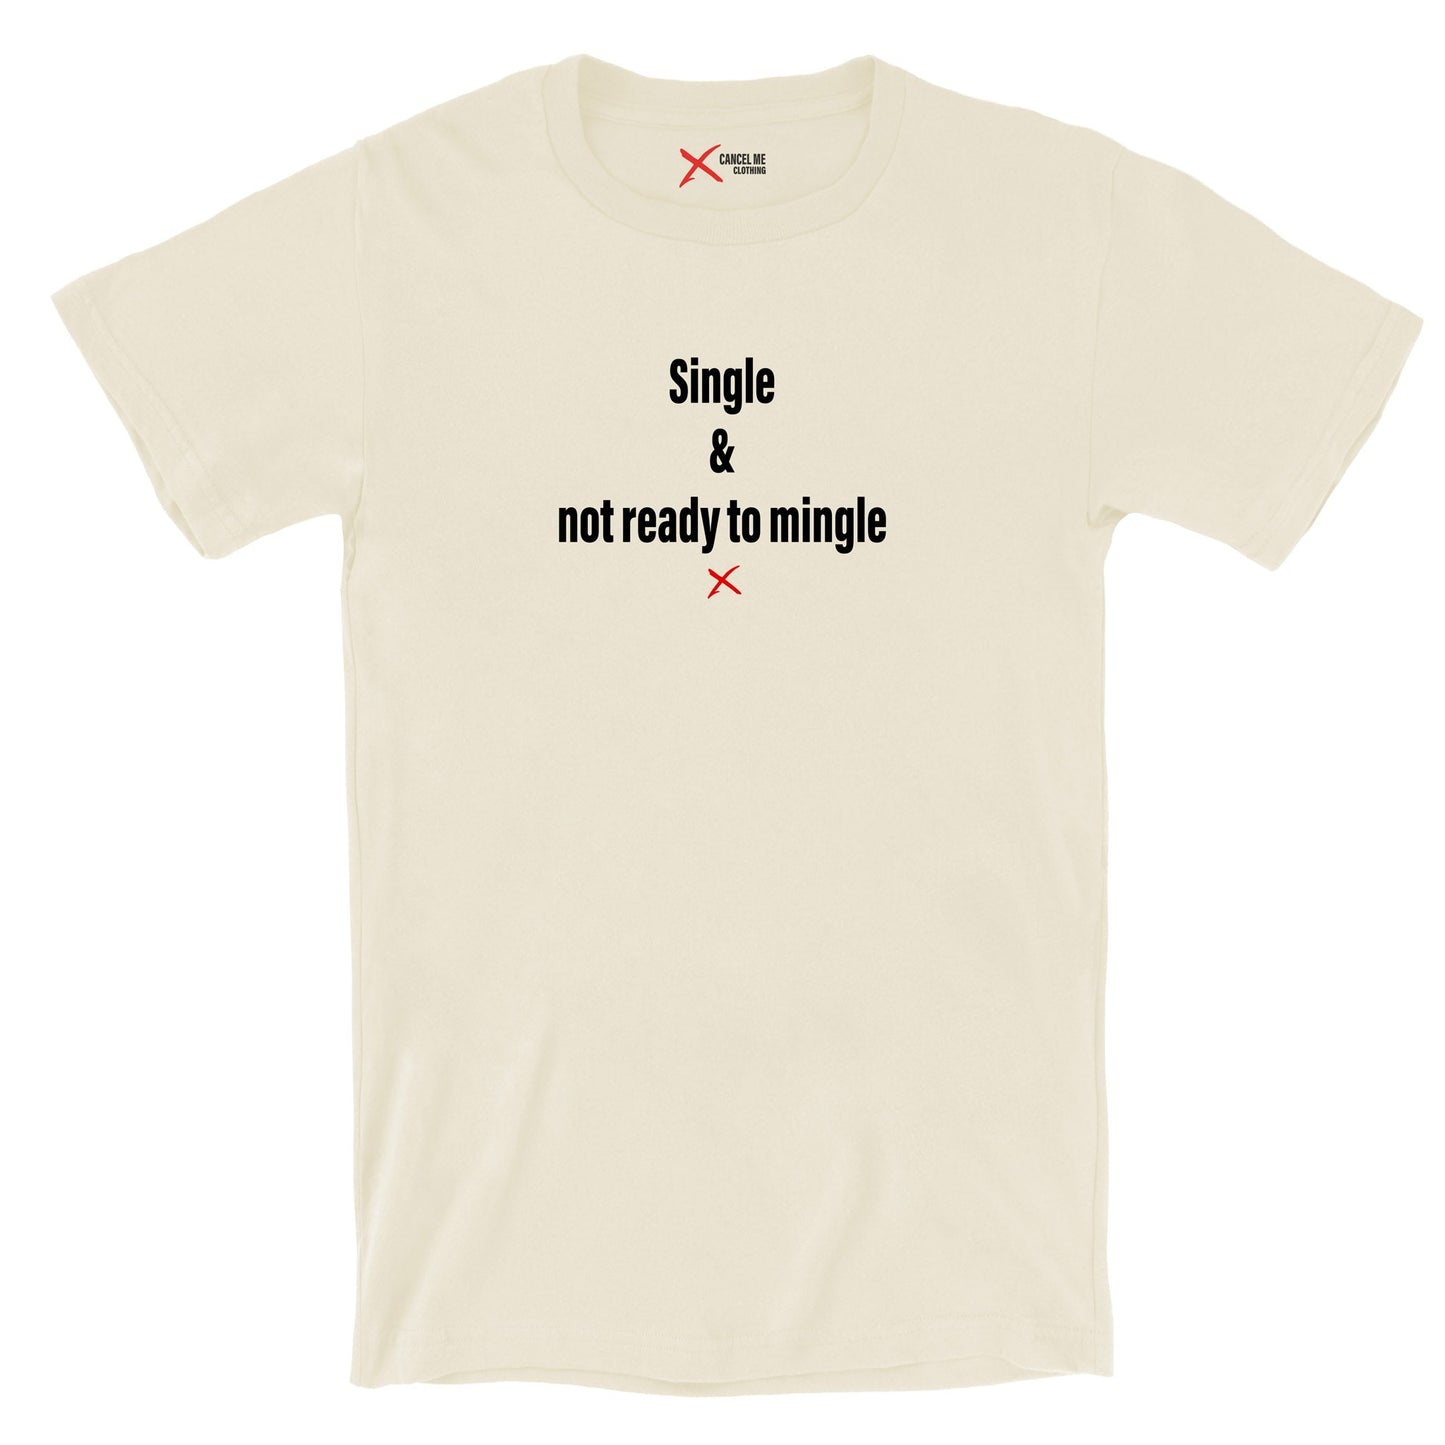 Single & not ready to mingle - Shirt